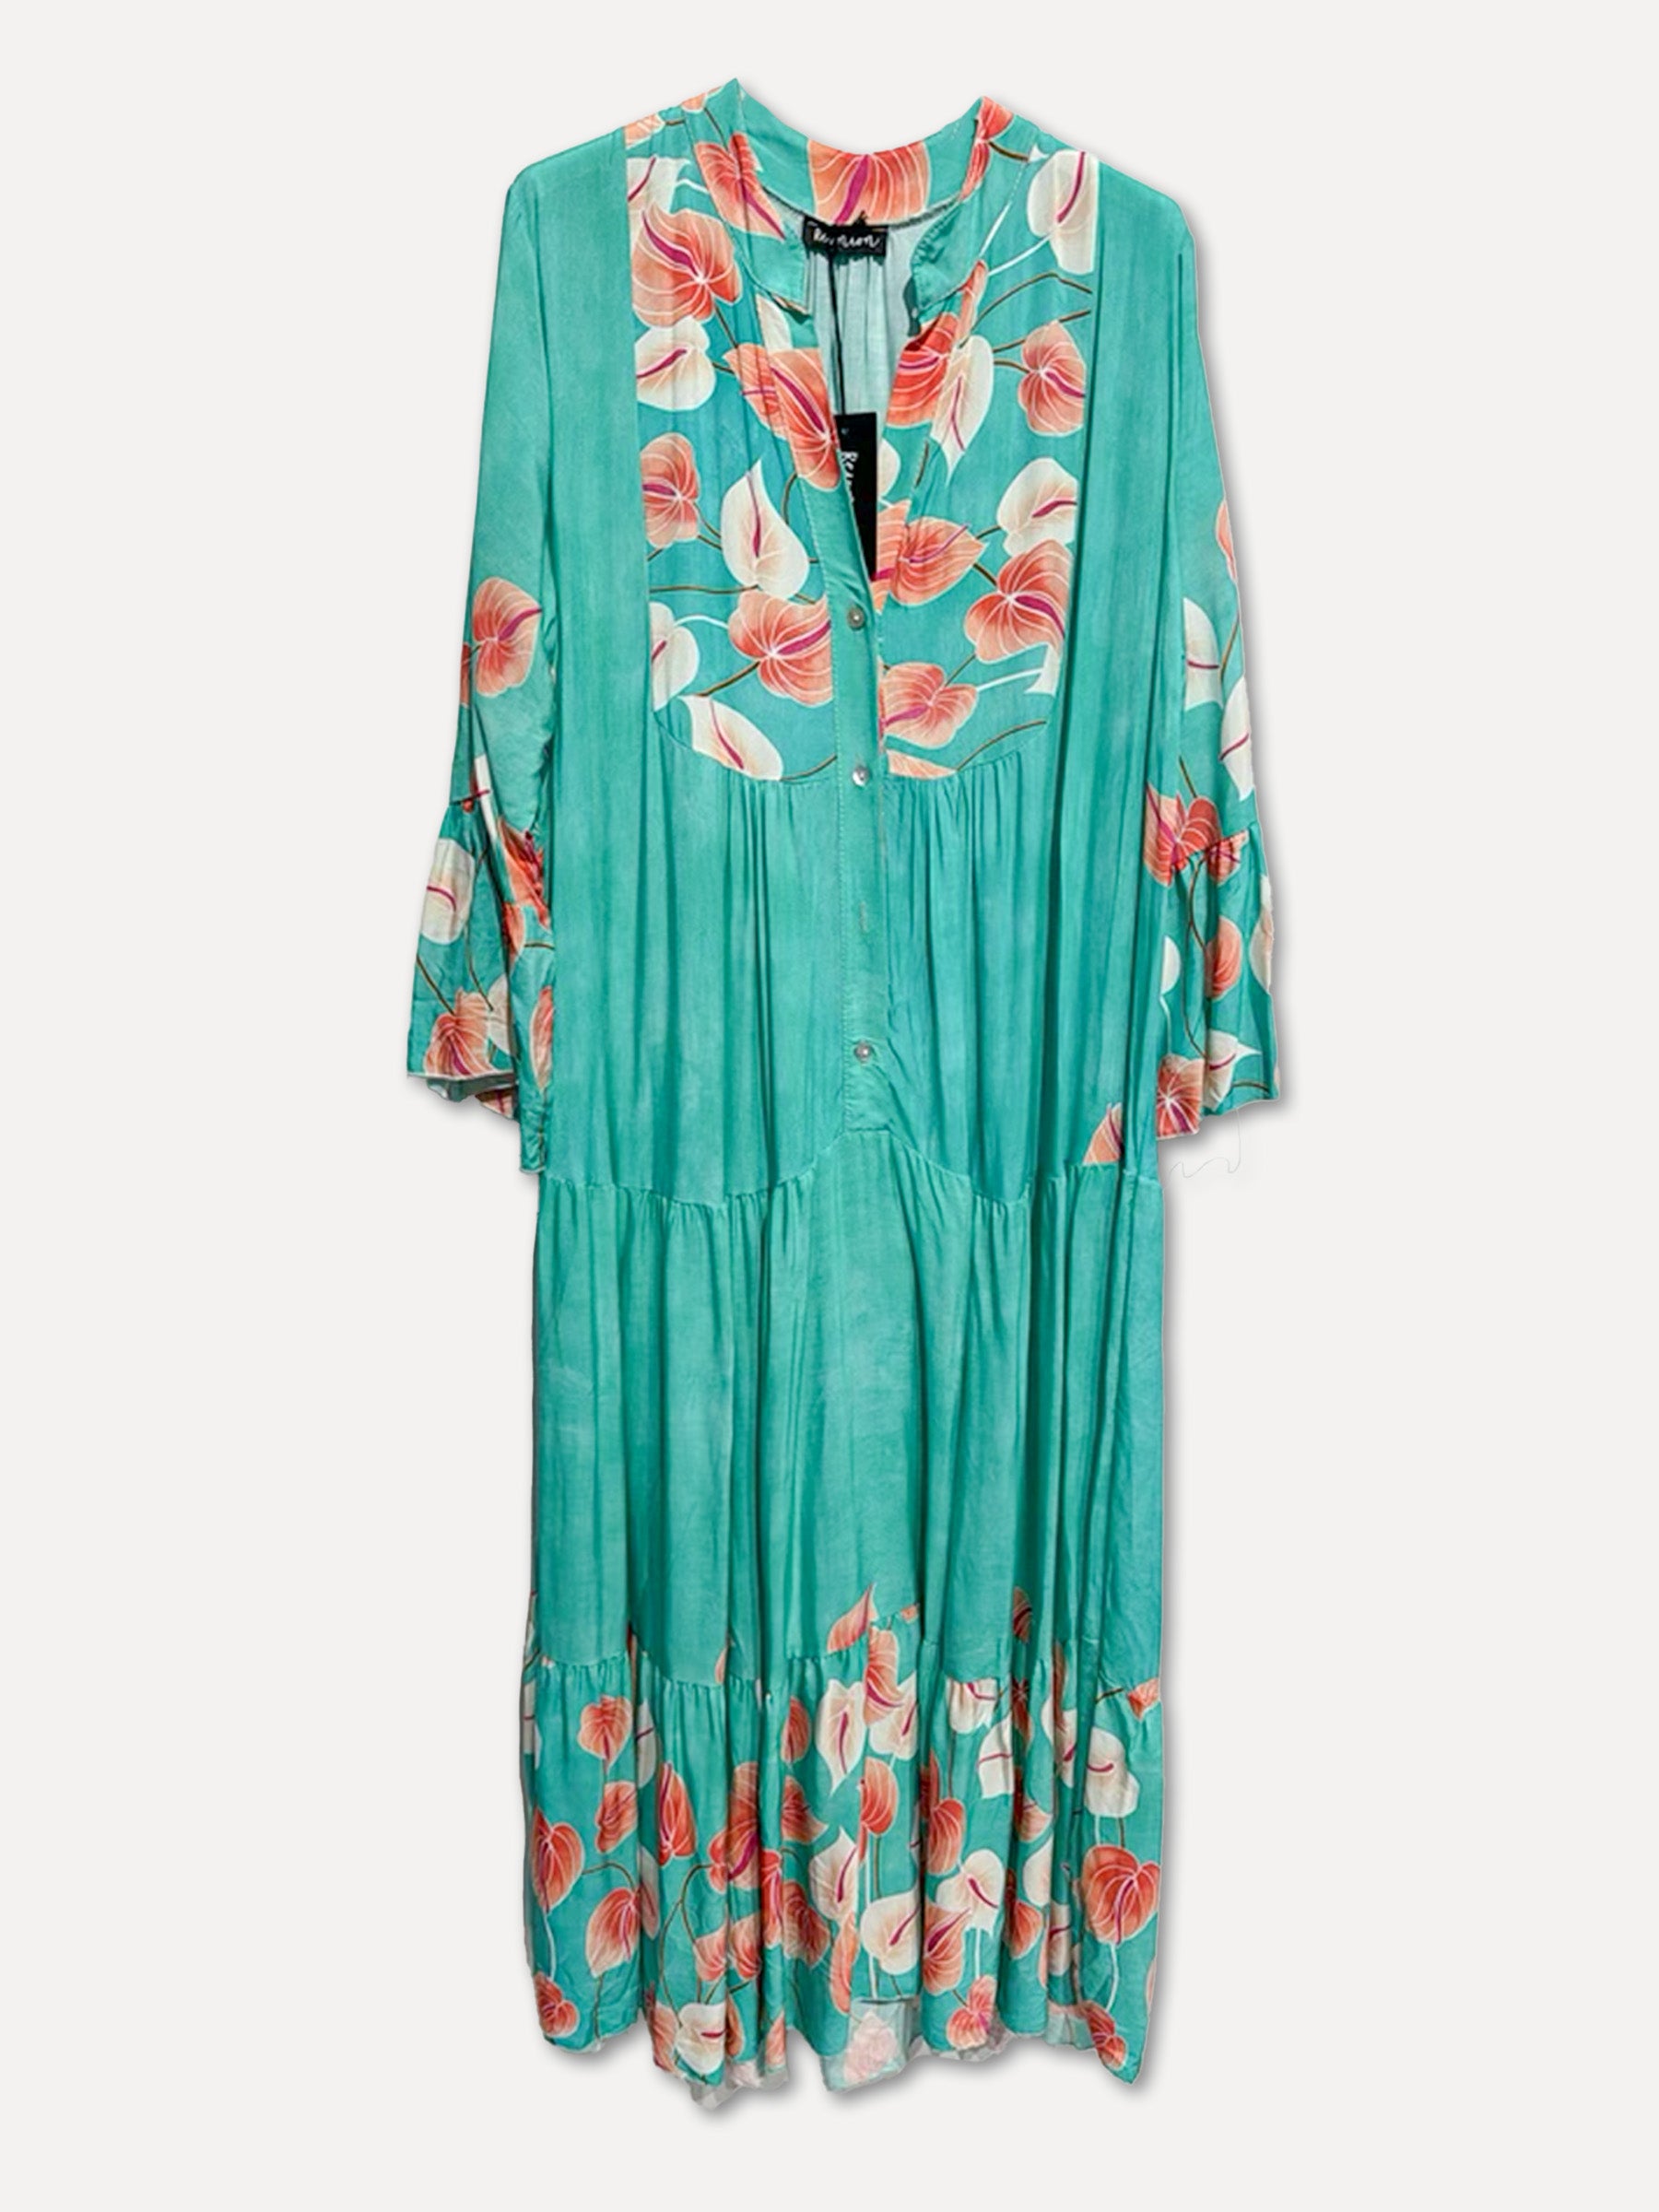 BALI Dress, Turquoise